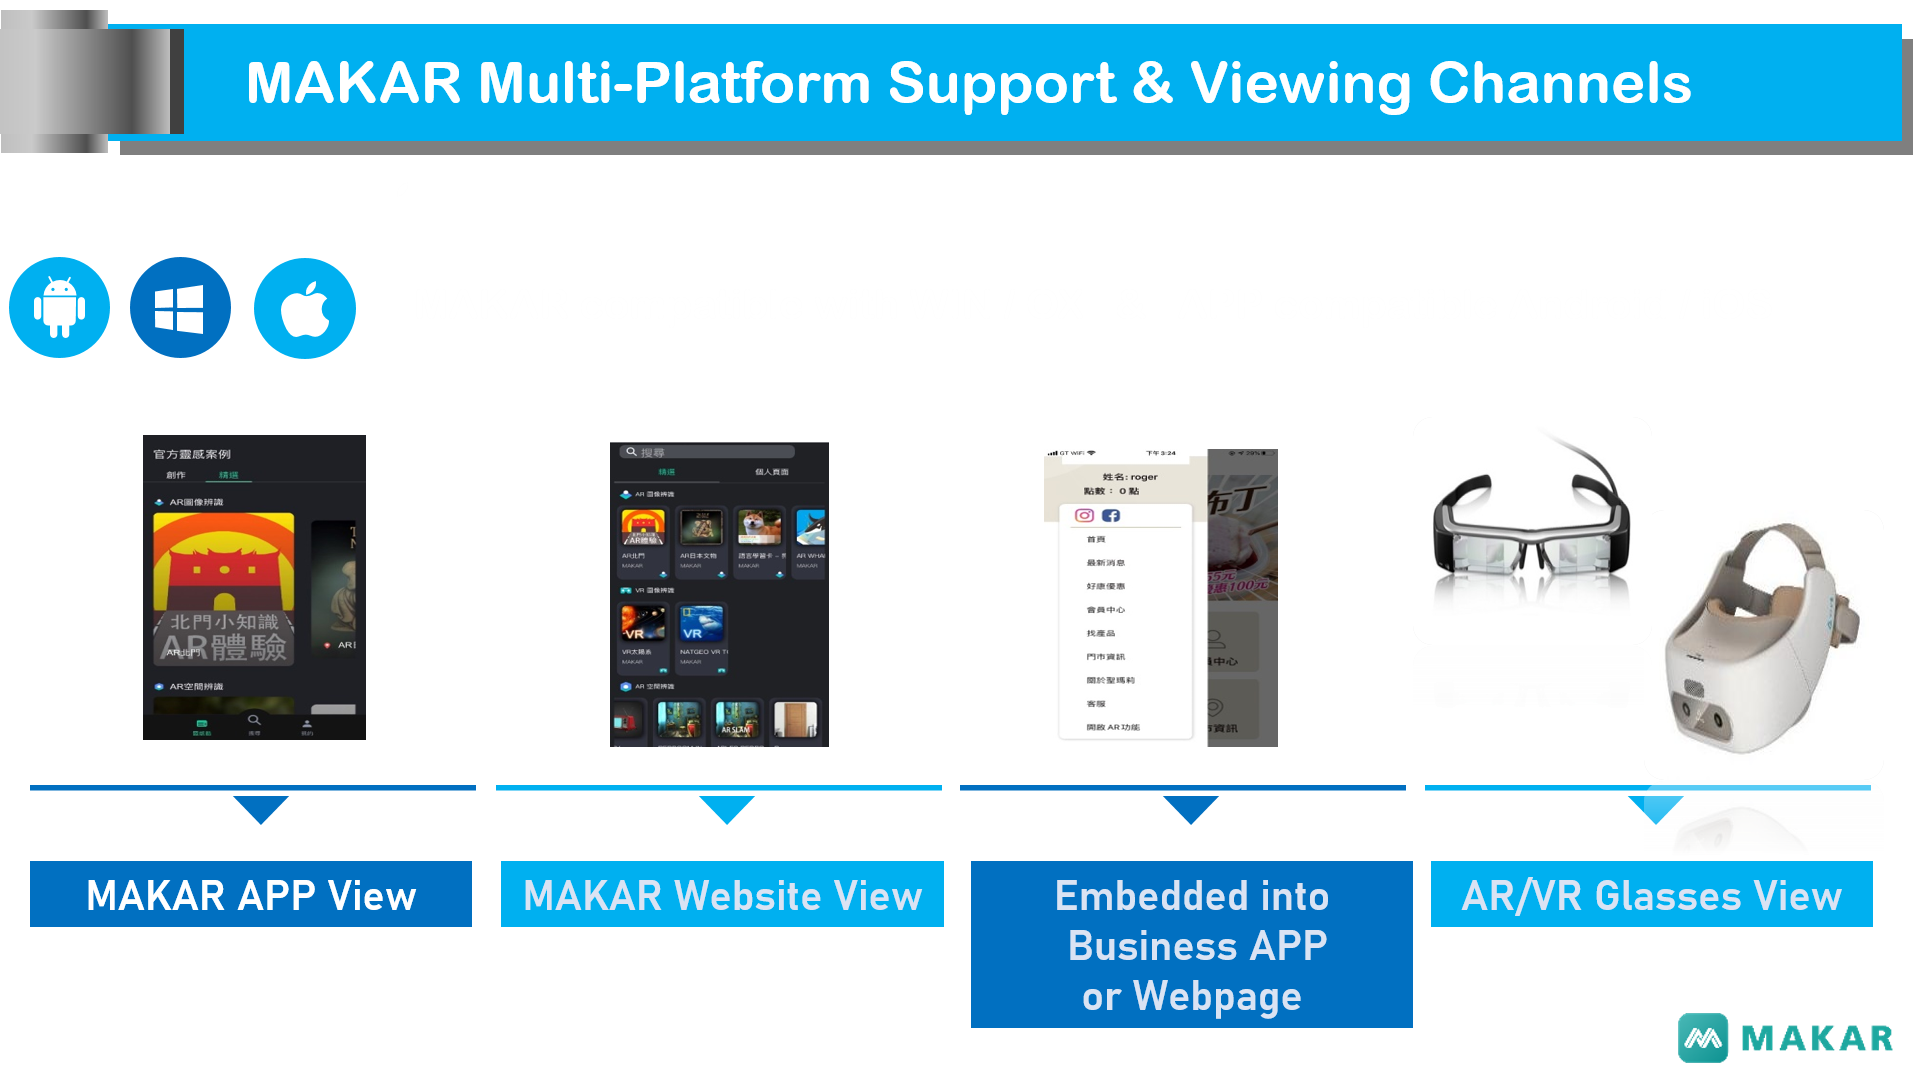 MAKAR Multi-Platform Support & Viewing Channels.